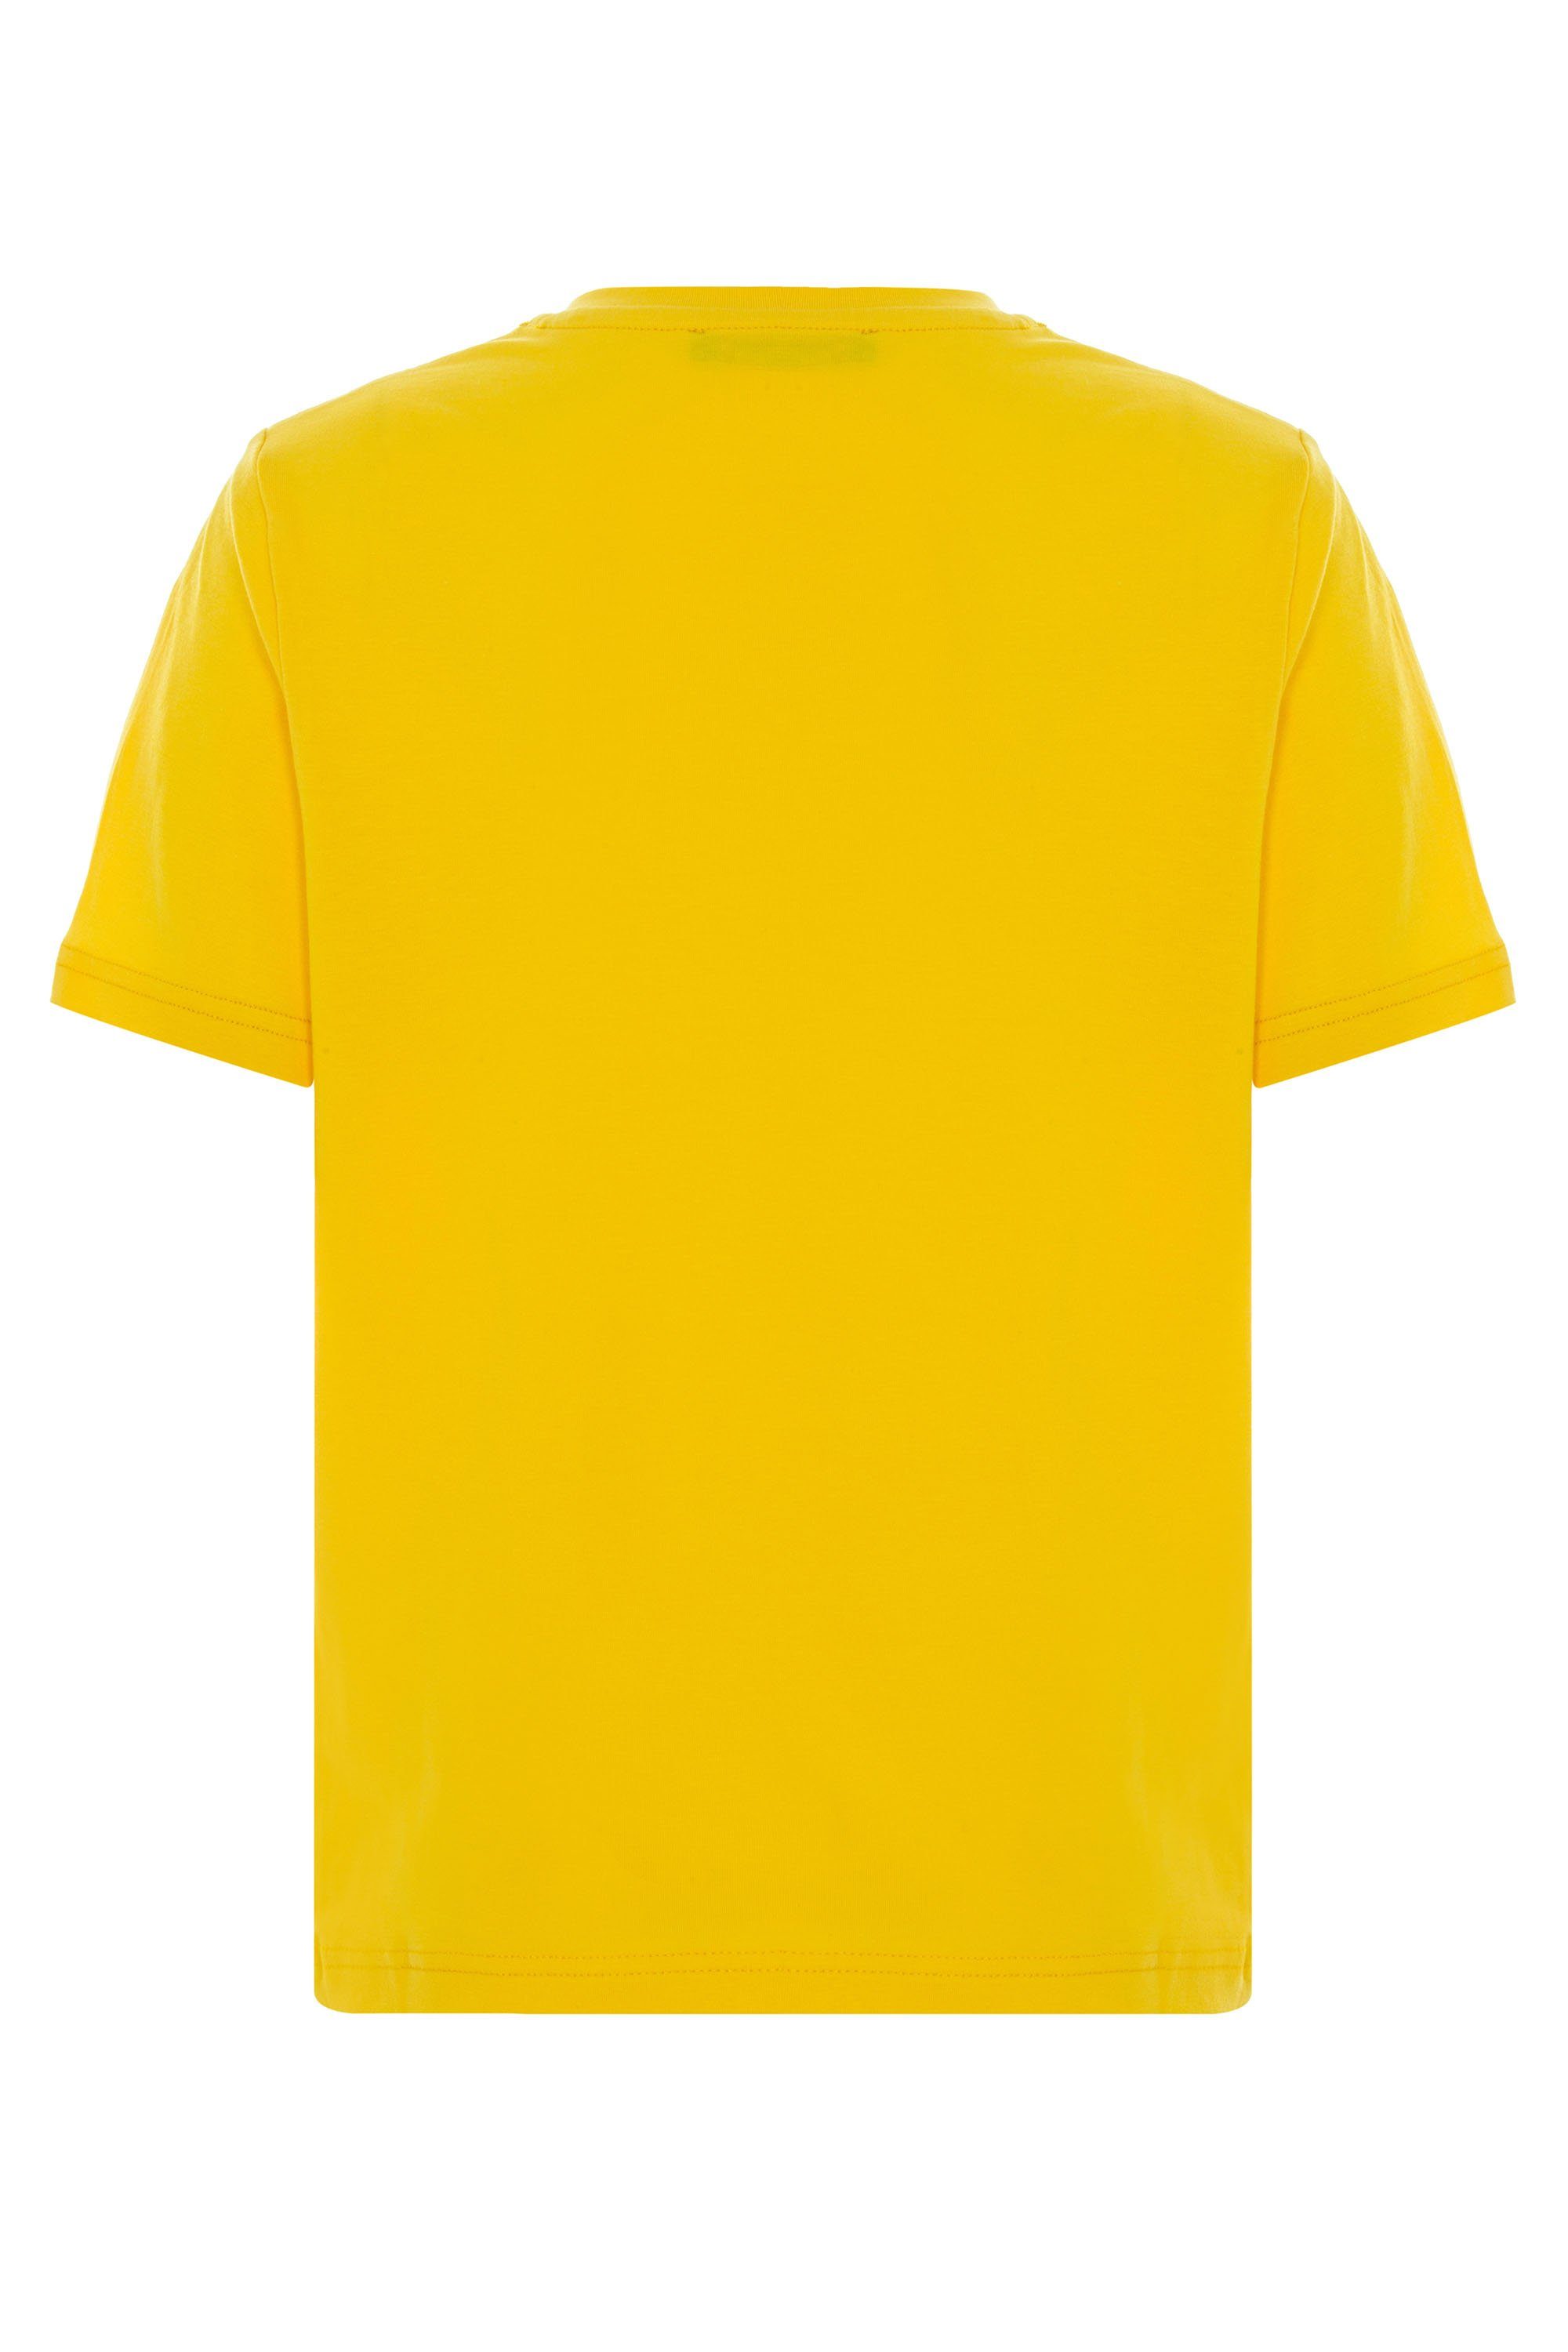 coolem Cipo mit & Print gelb-schwarz T-Shirt Baxx